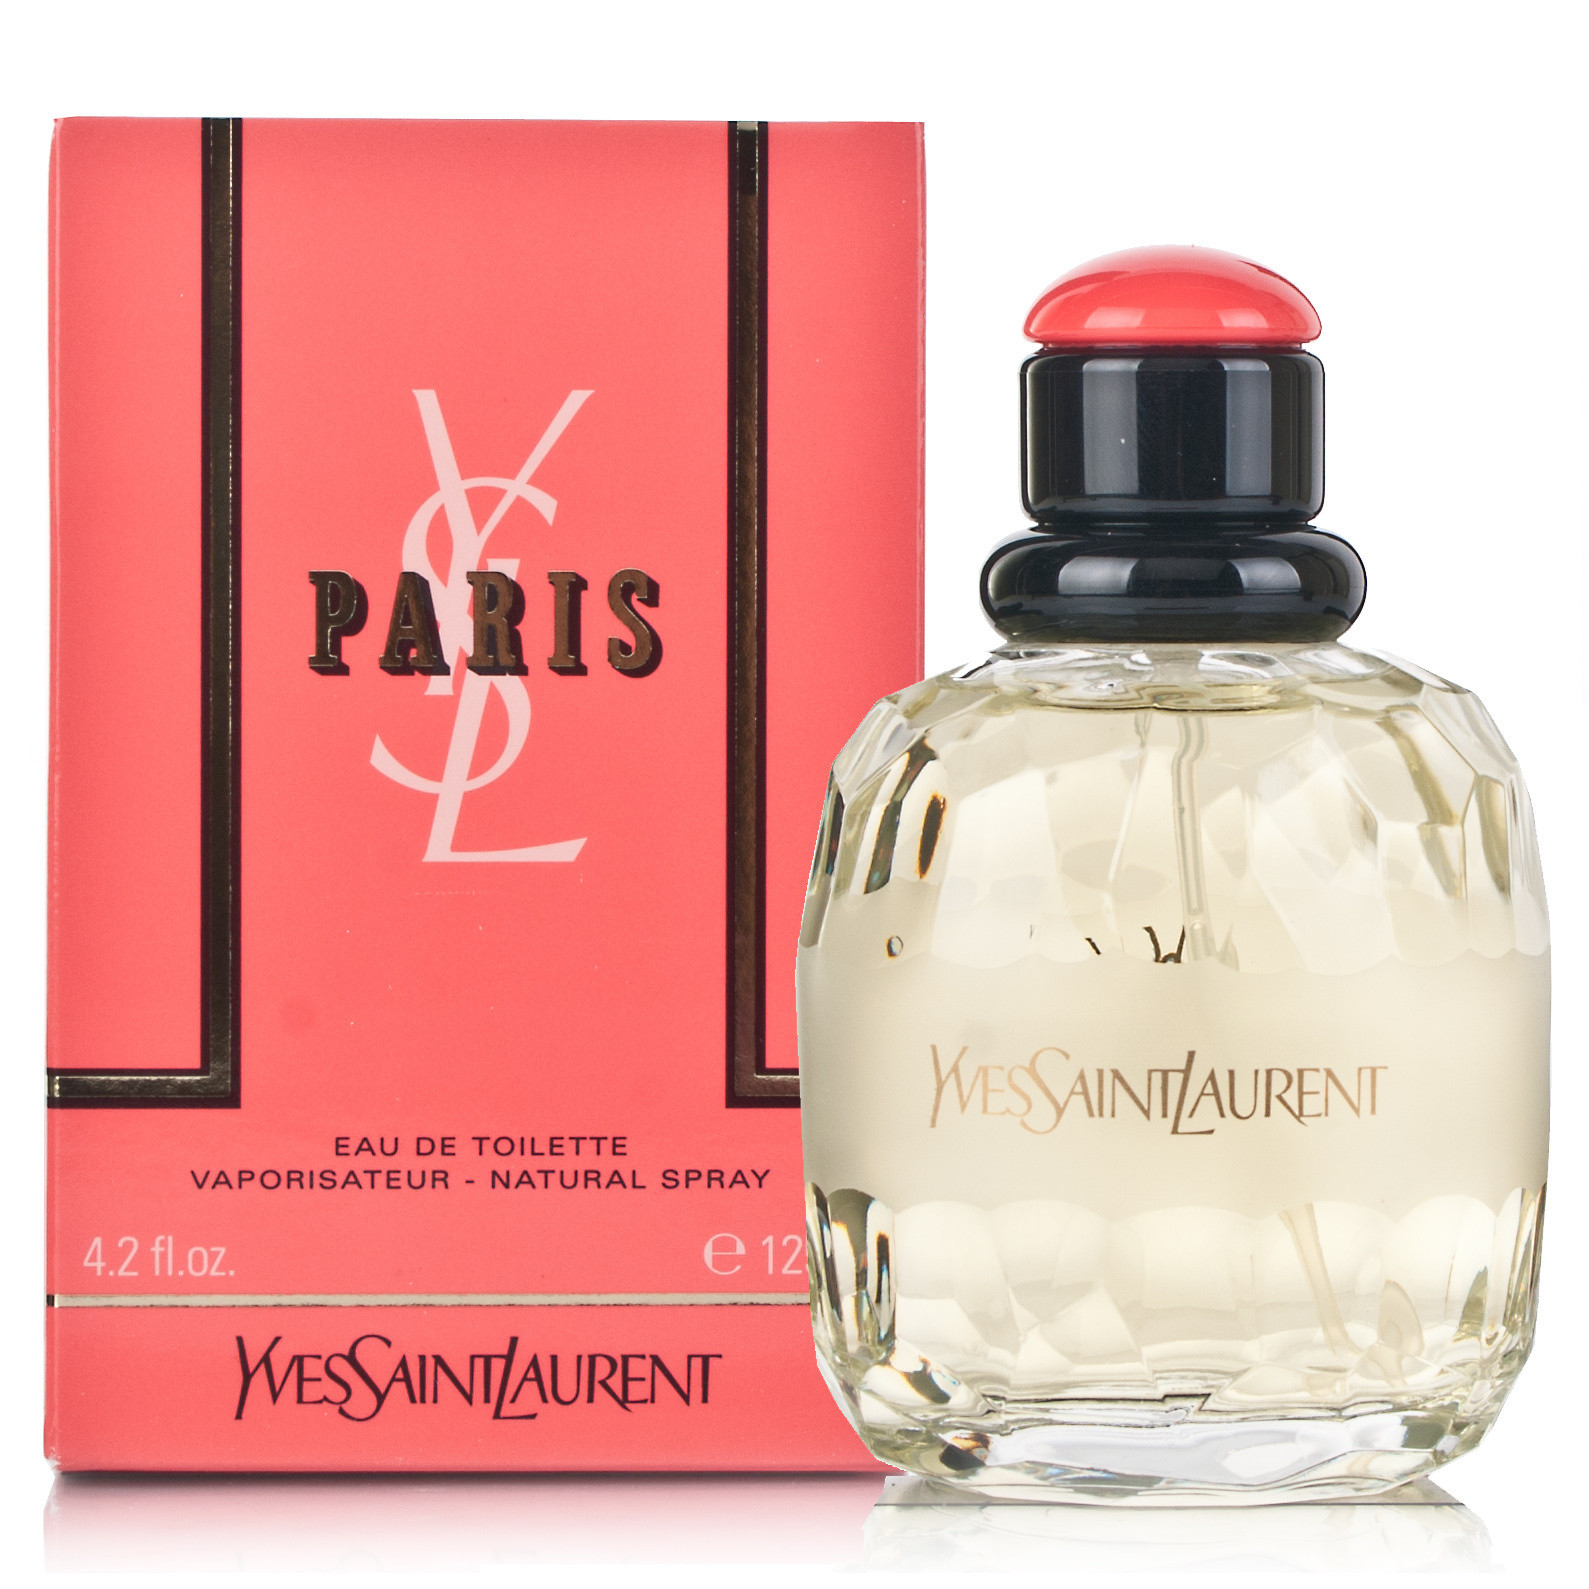 Paris Yves Saint Laurent Perfume A Fragrance For Women 1983